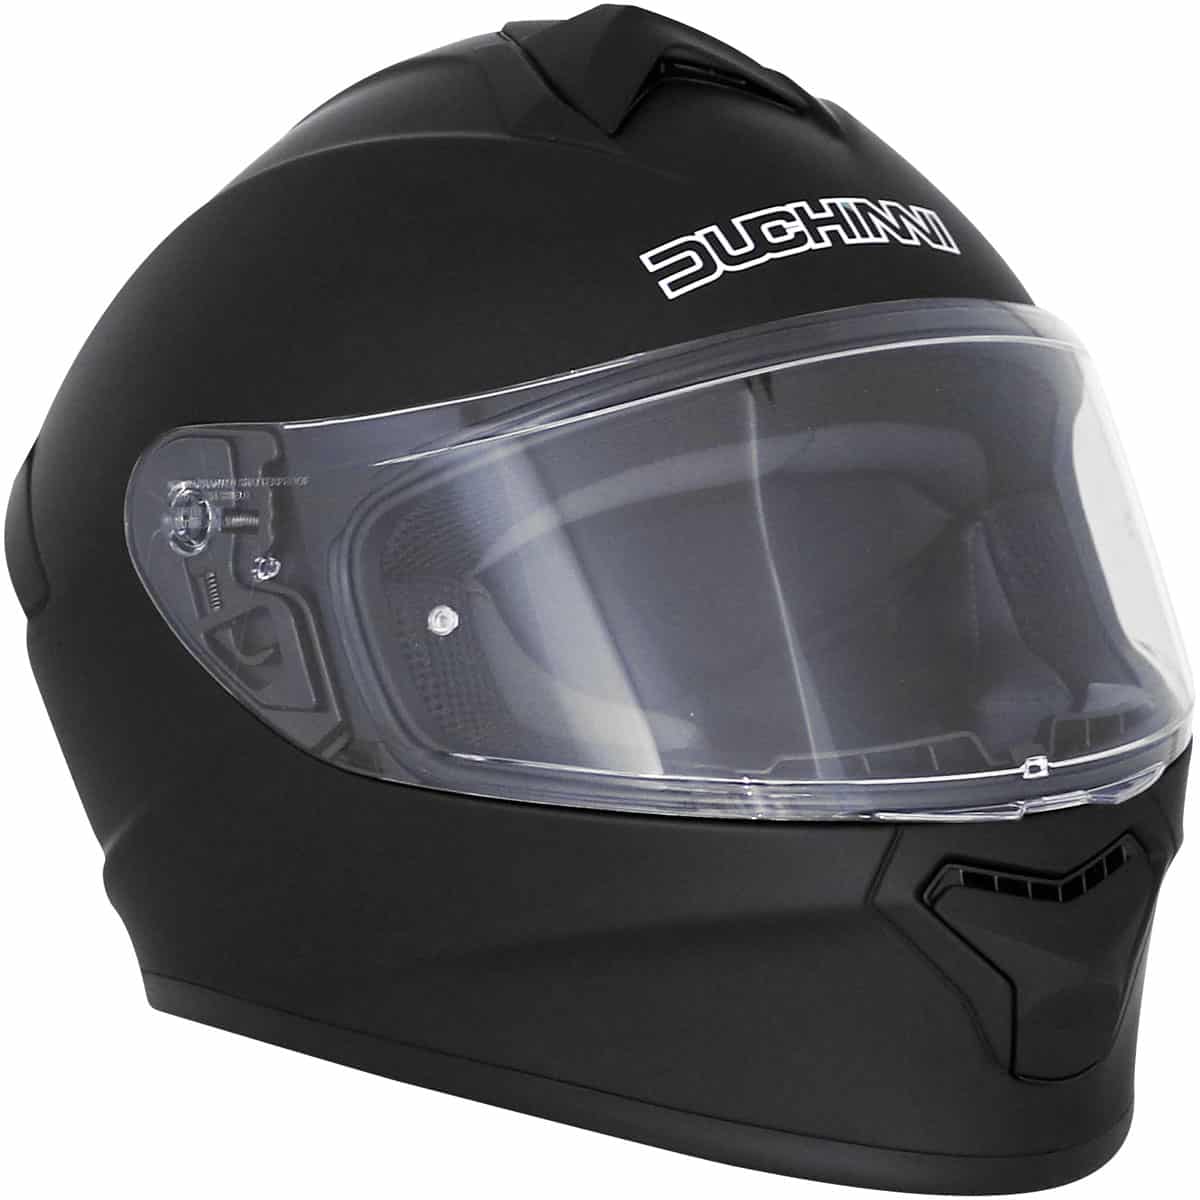 Duchinni D977 Full Face Motorcycle Helmet - Matt Black 3